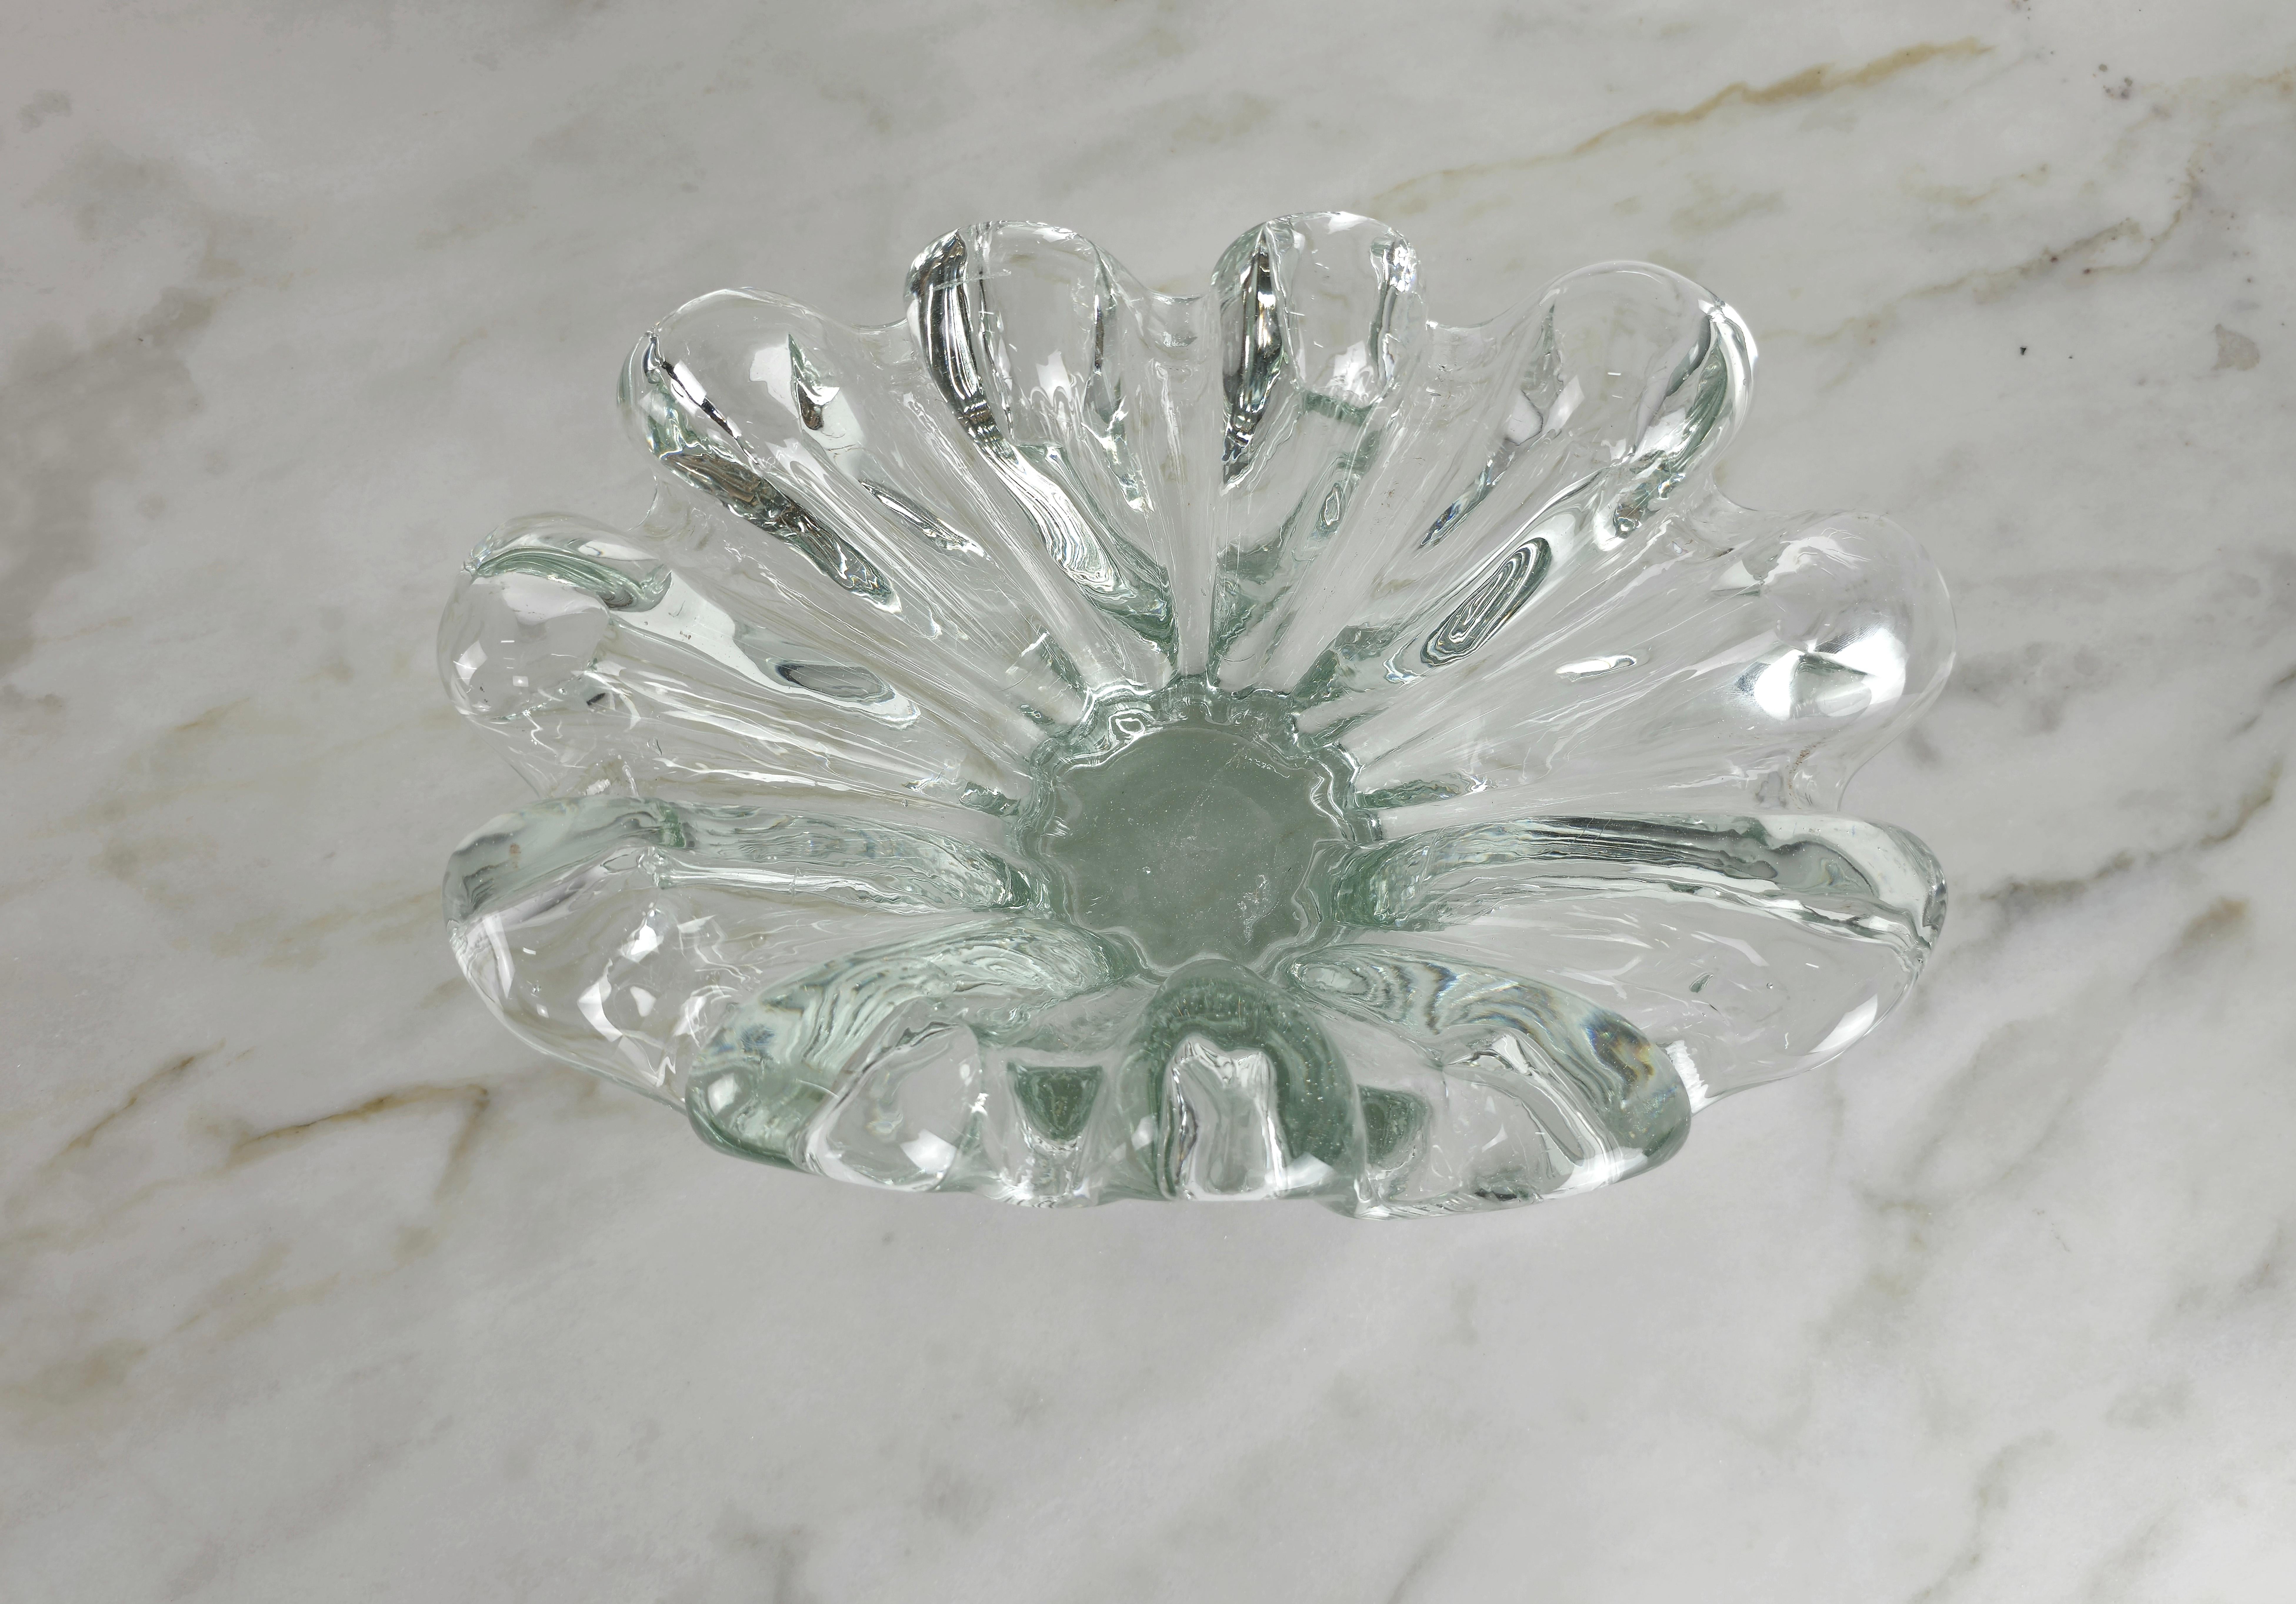 Vase Decorative Object Transparent Murano Glass Large Midcentury Italy 1960s 3